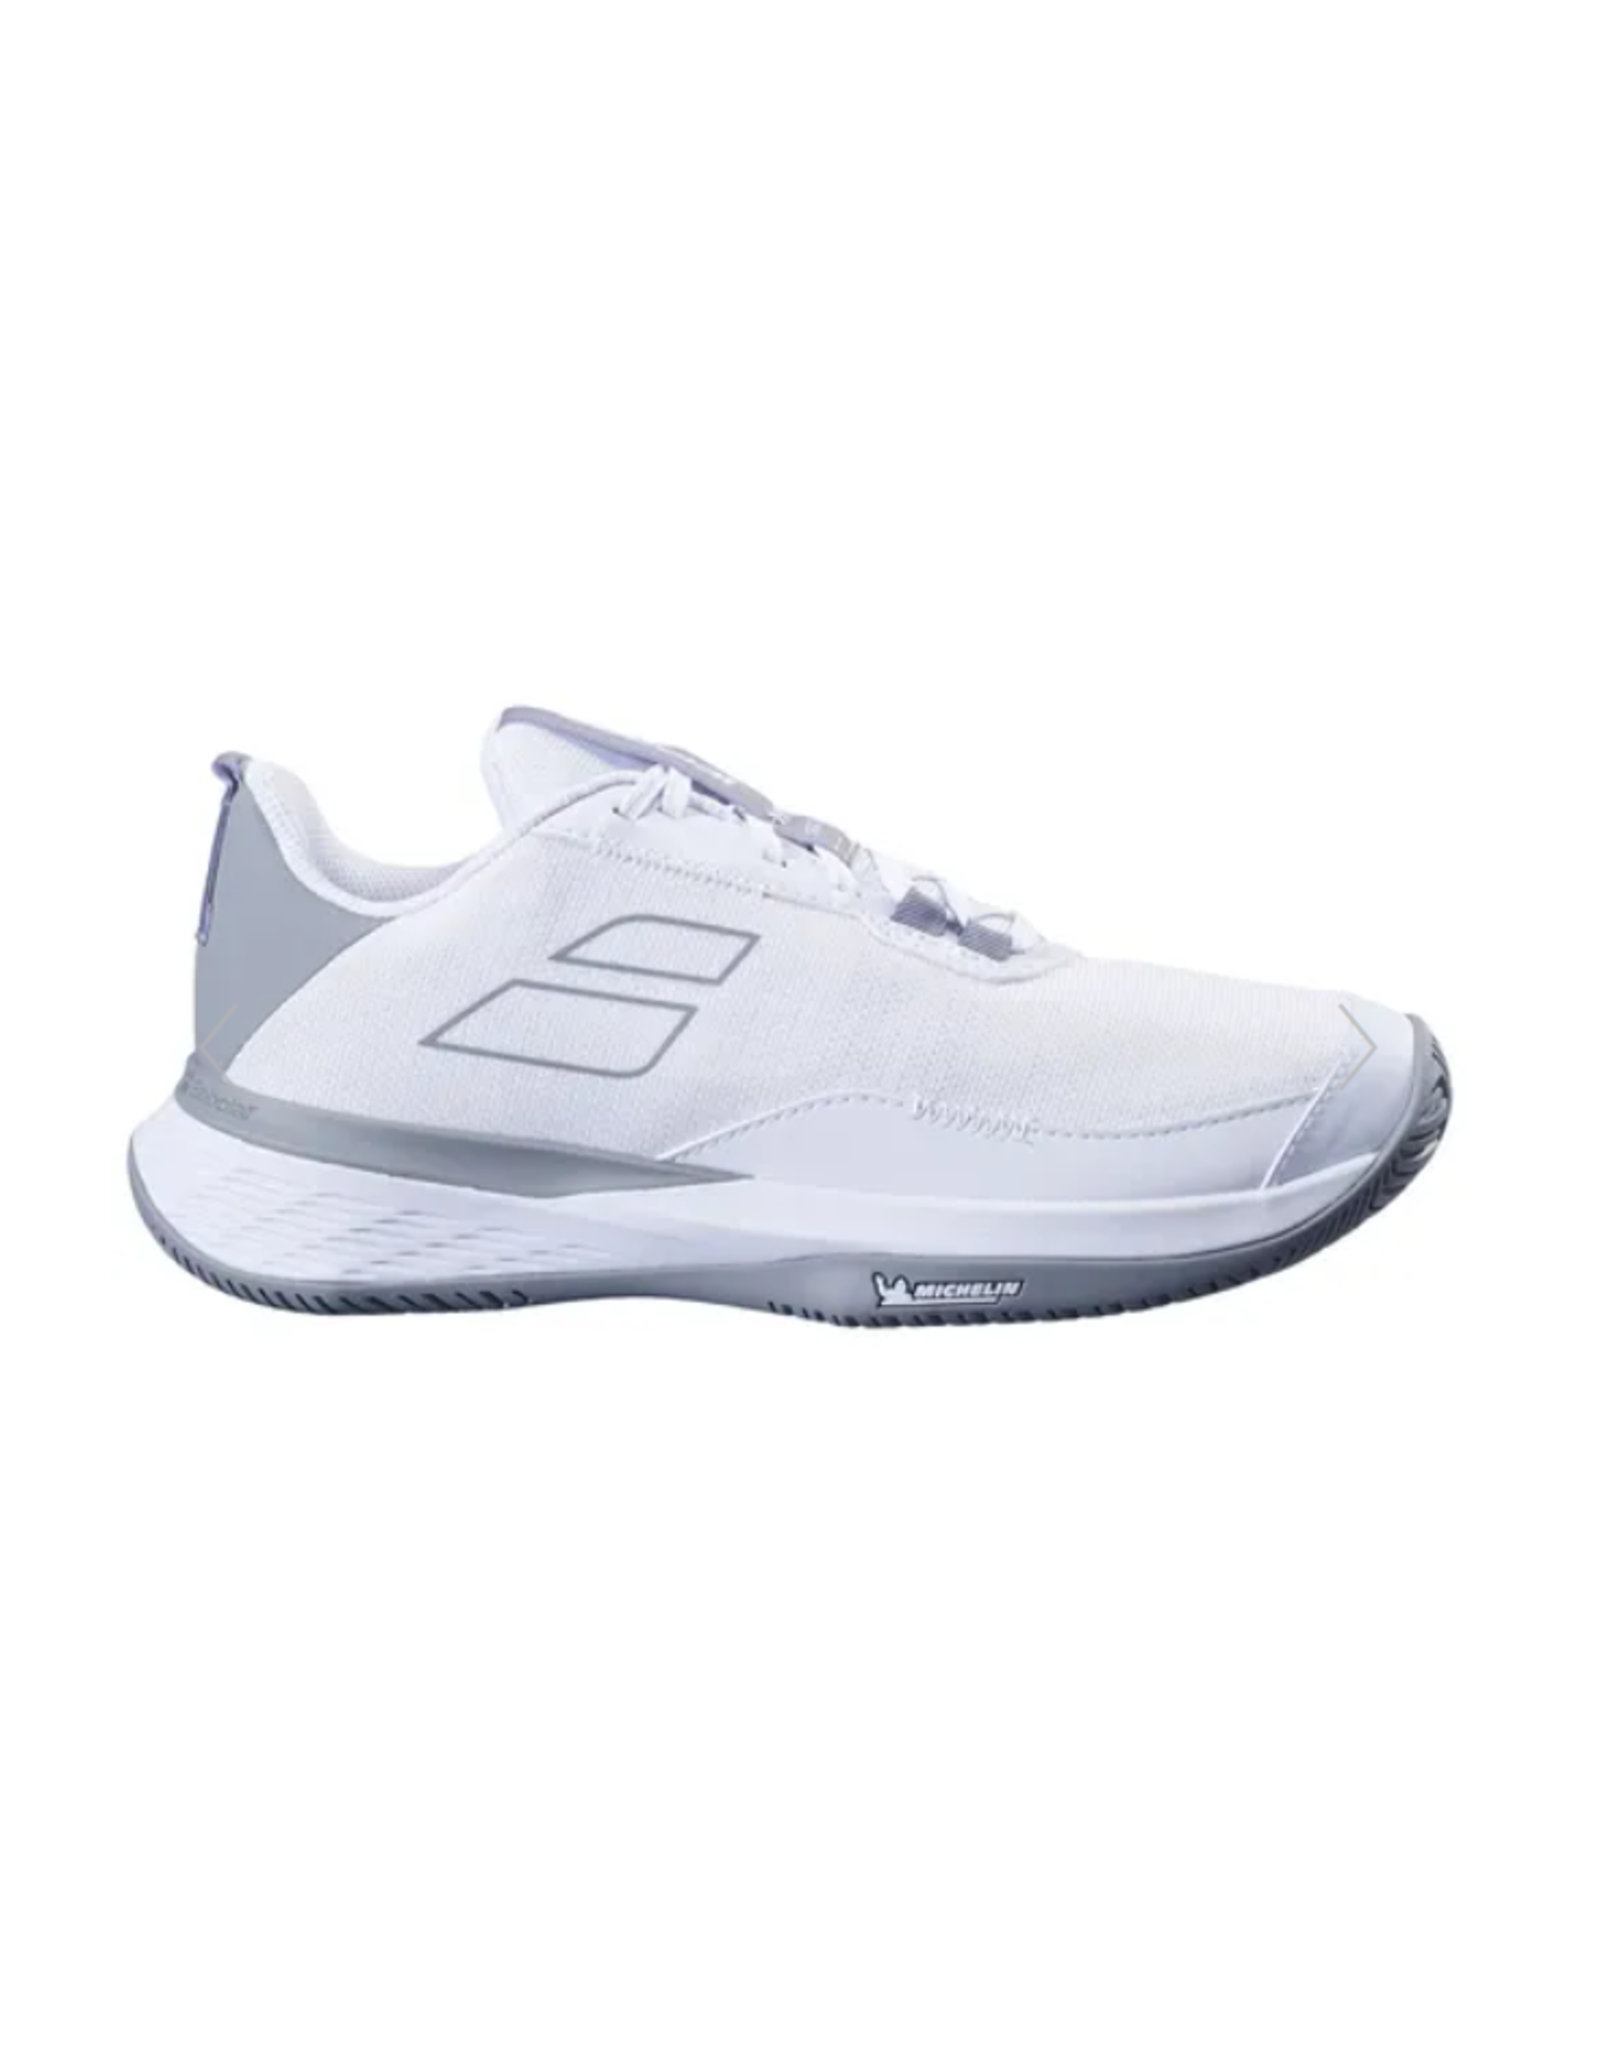 Babolat Babolat Women's SFX Evo All Court (White/Lunar Grey) Tennis Shoe